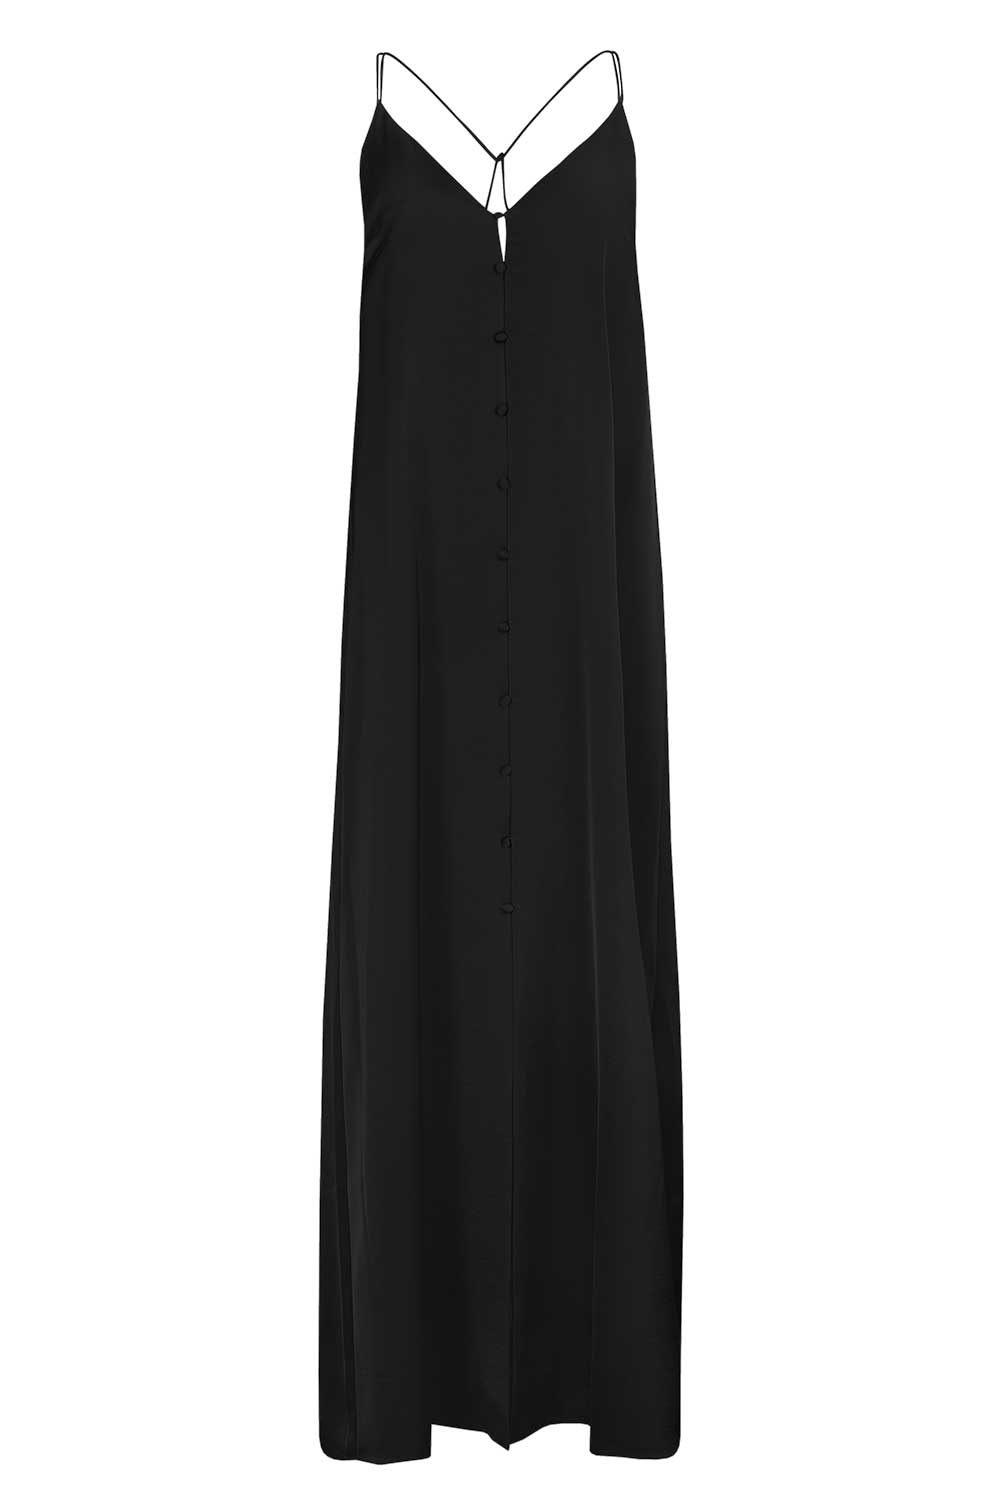 Dante 6 Satijnen maxi-jurk Loan zwart